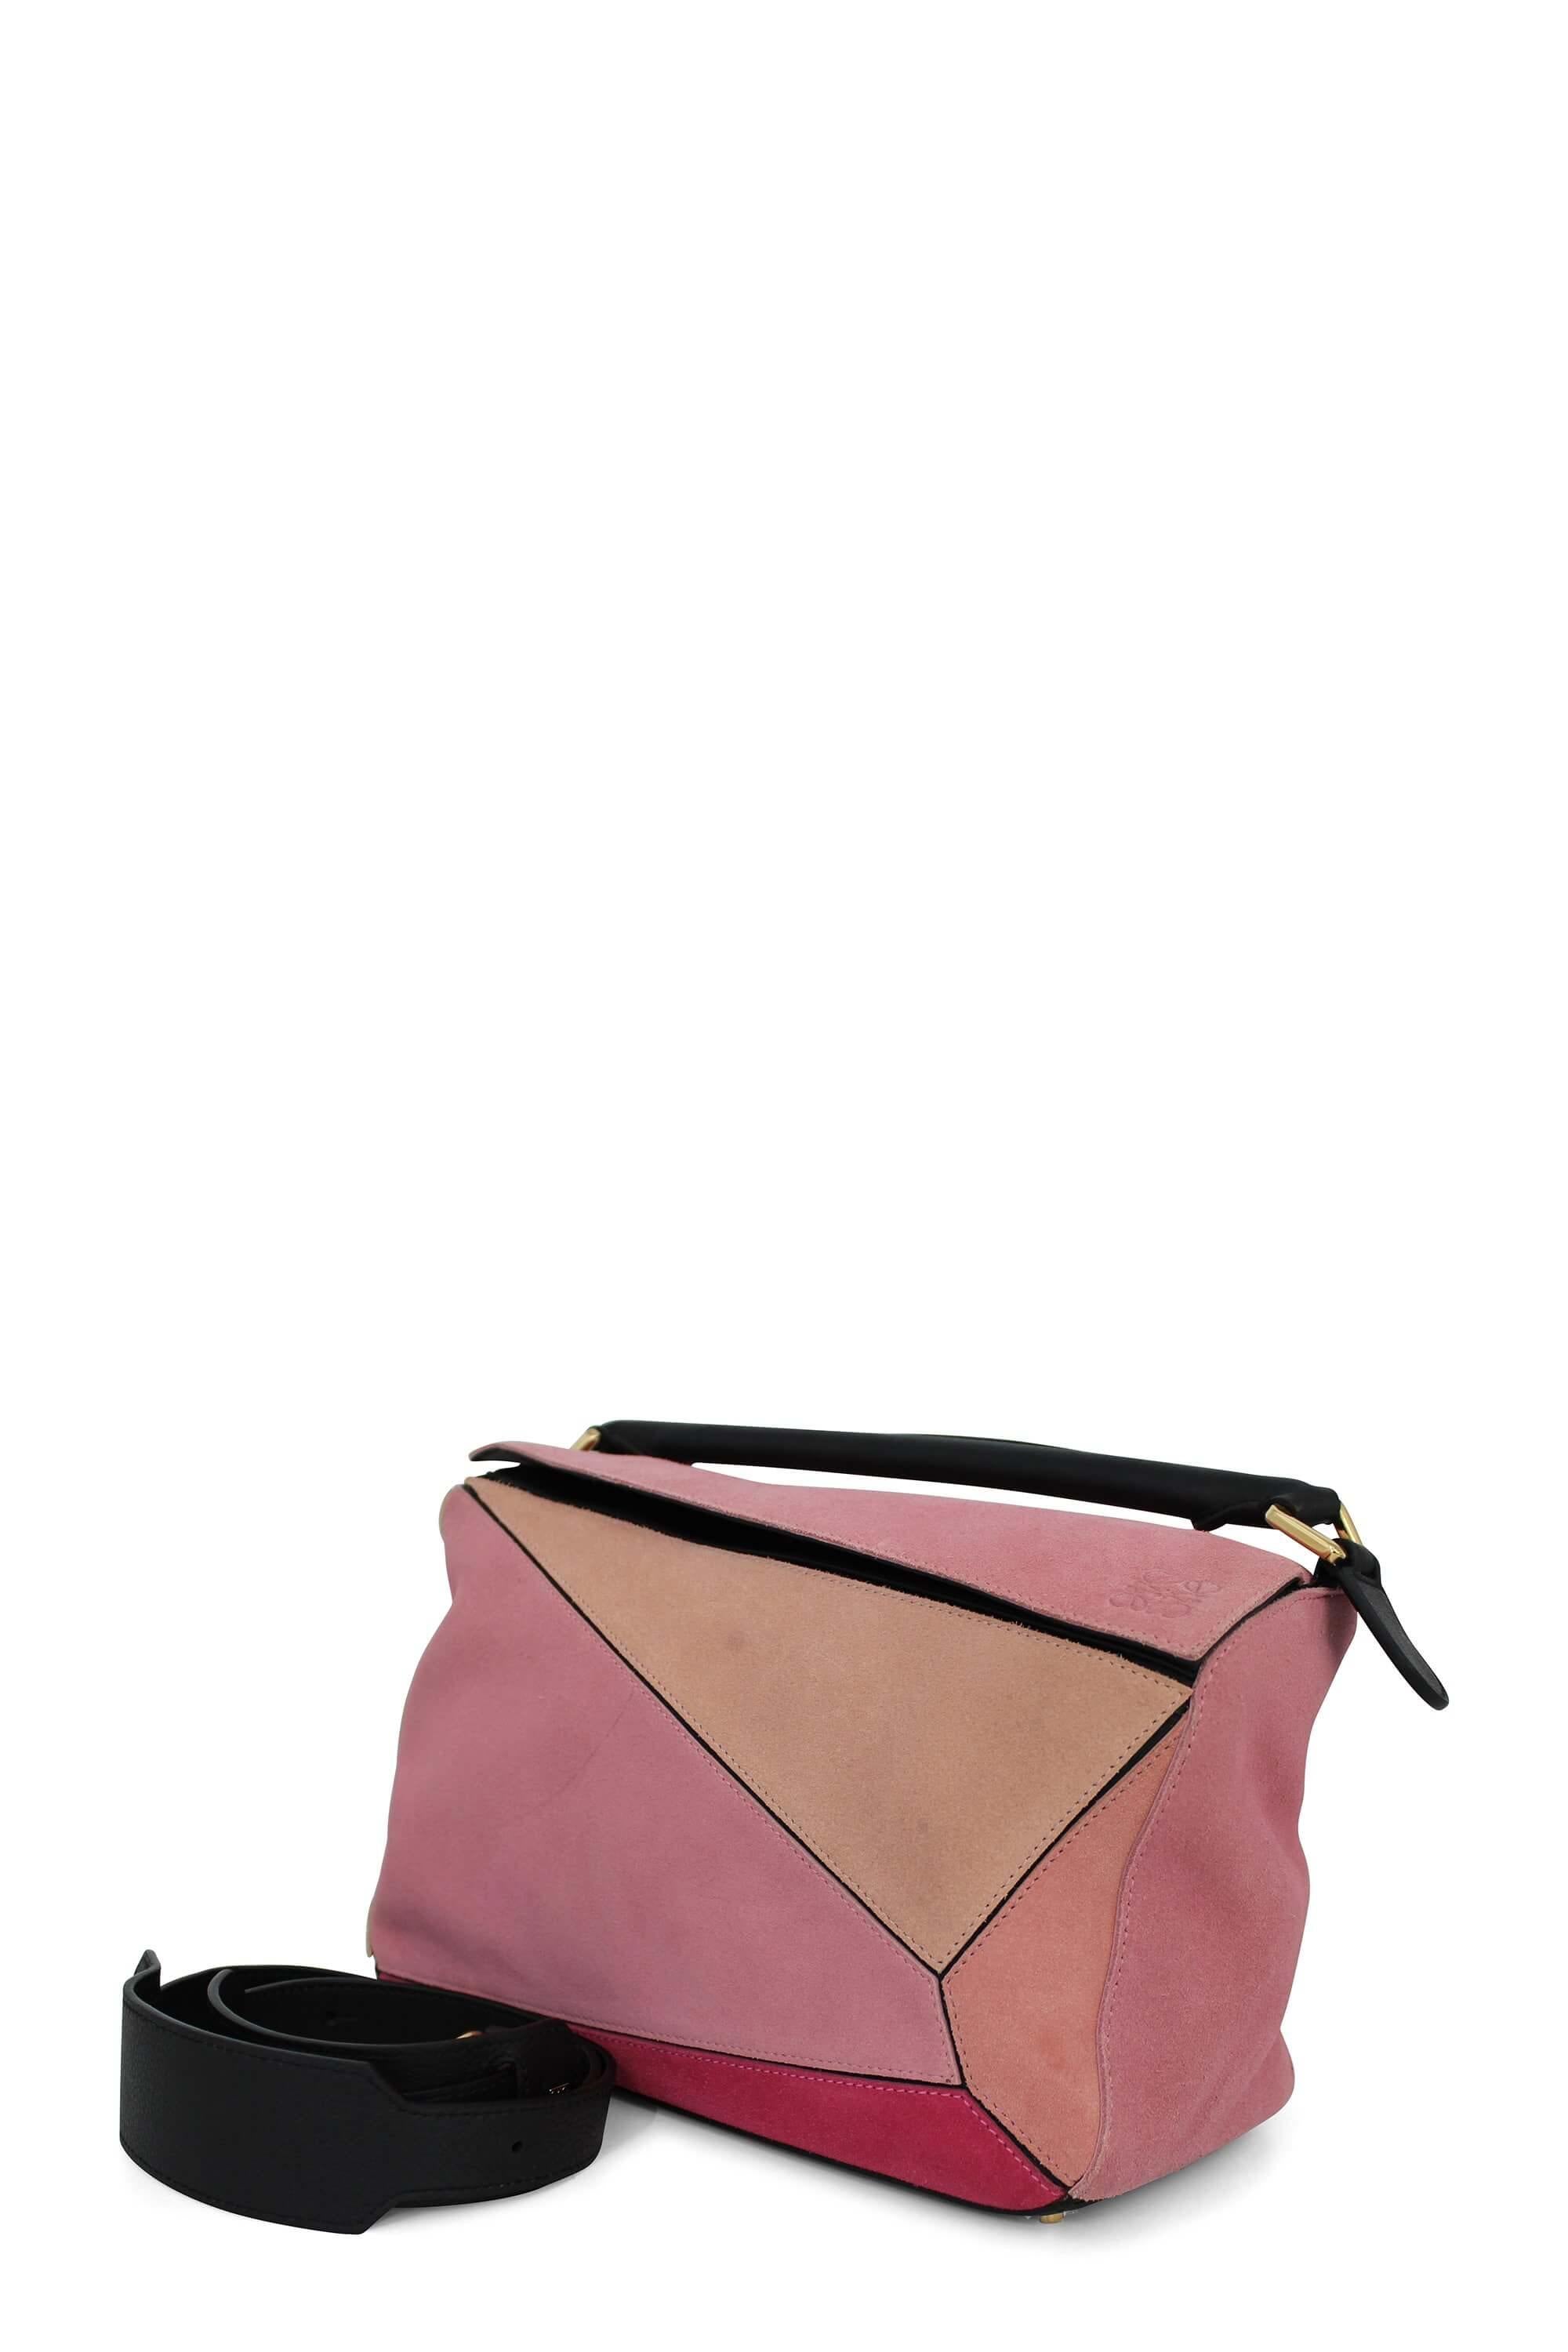 Chloé Nile Handbag 369908 | Collector Square